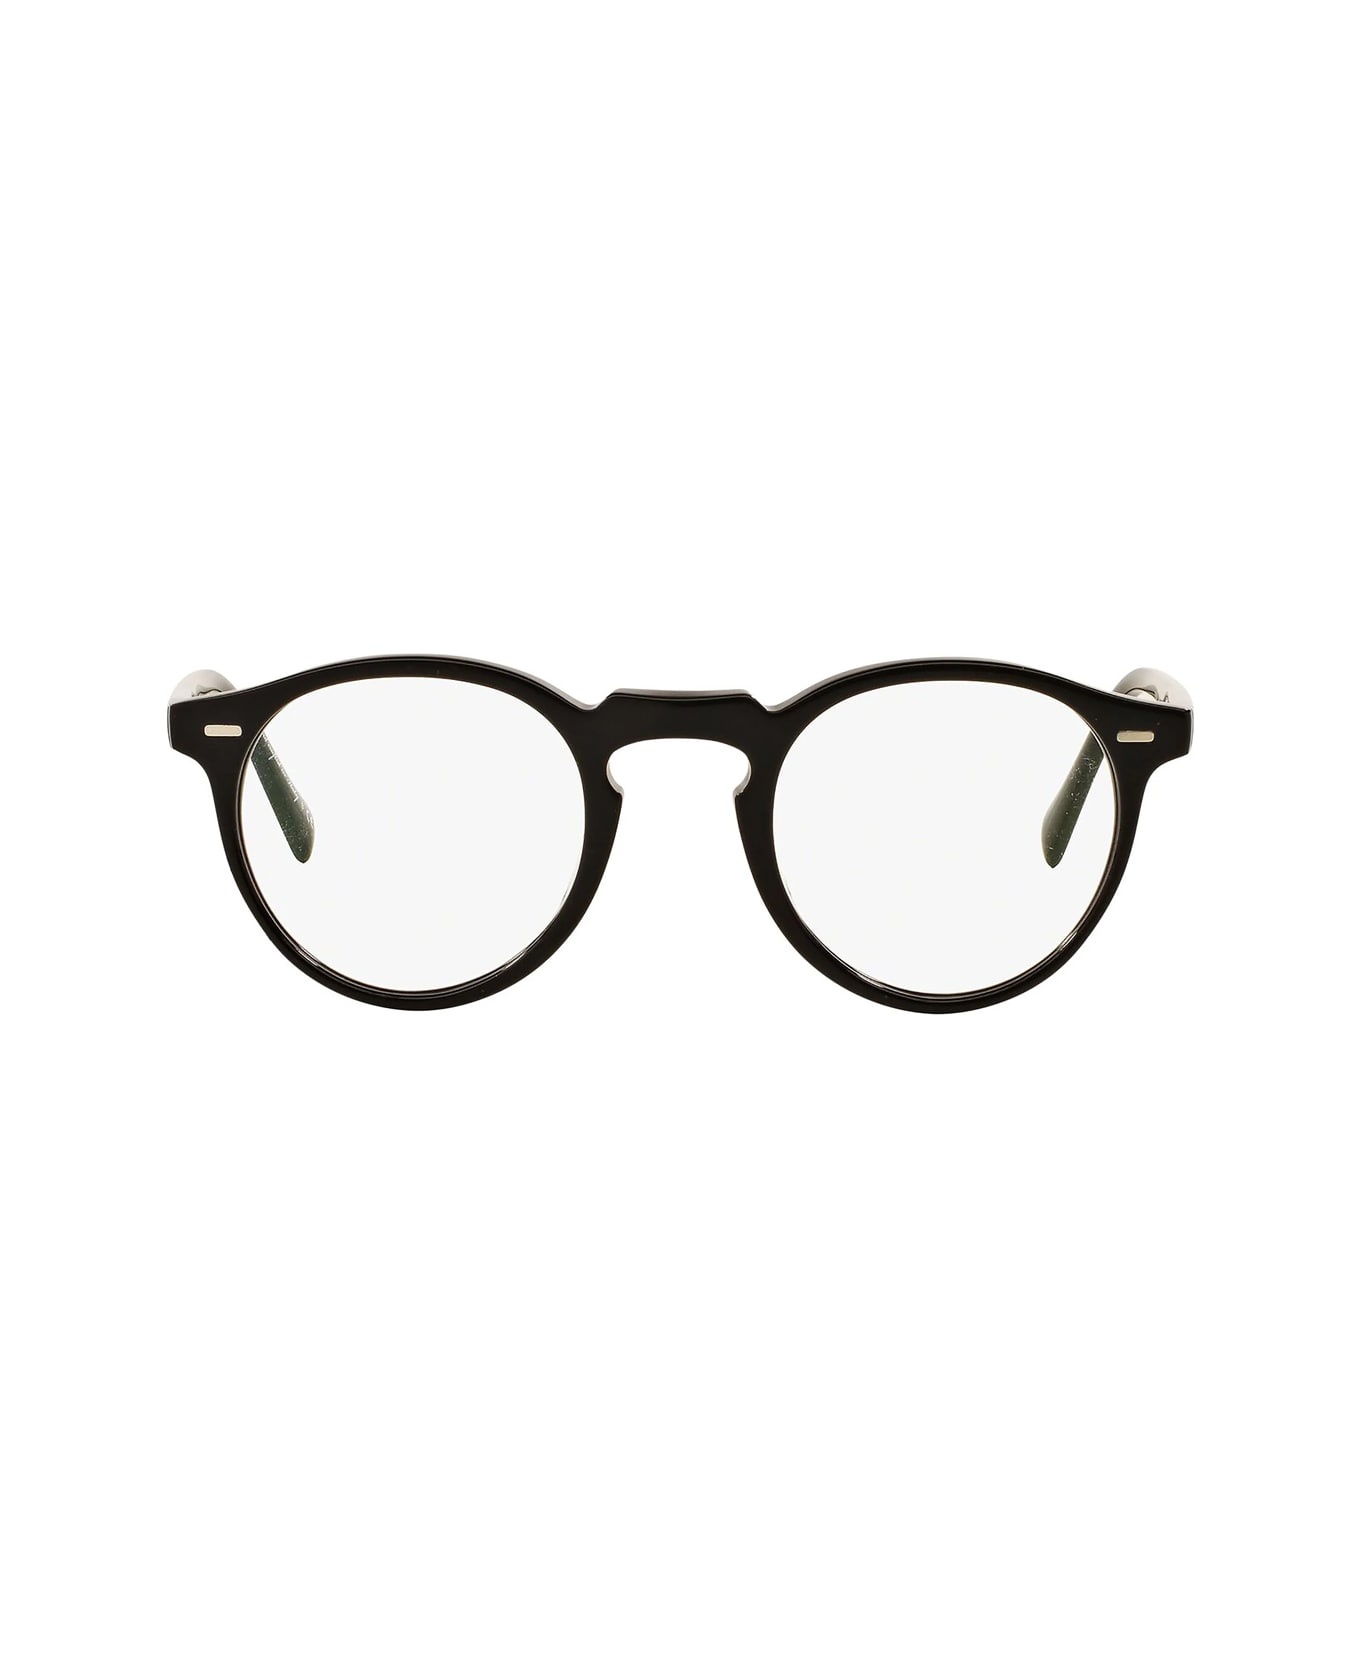 Oliver Peoples Ov5186 - Gregory Peck 1005 Glasses - Nero アイウェア